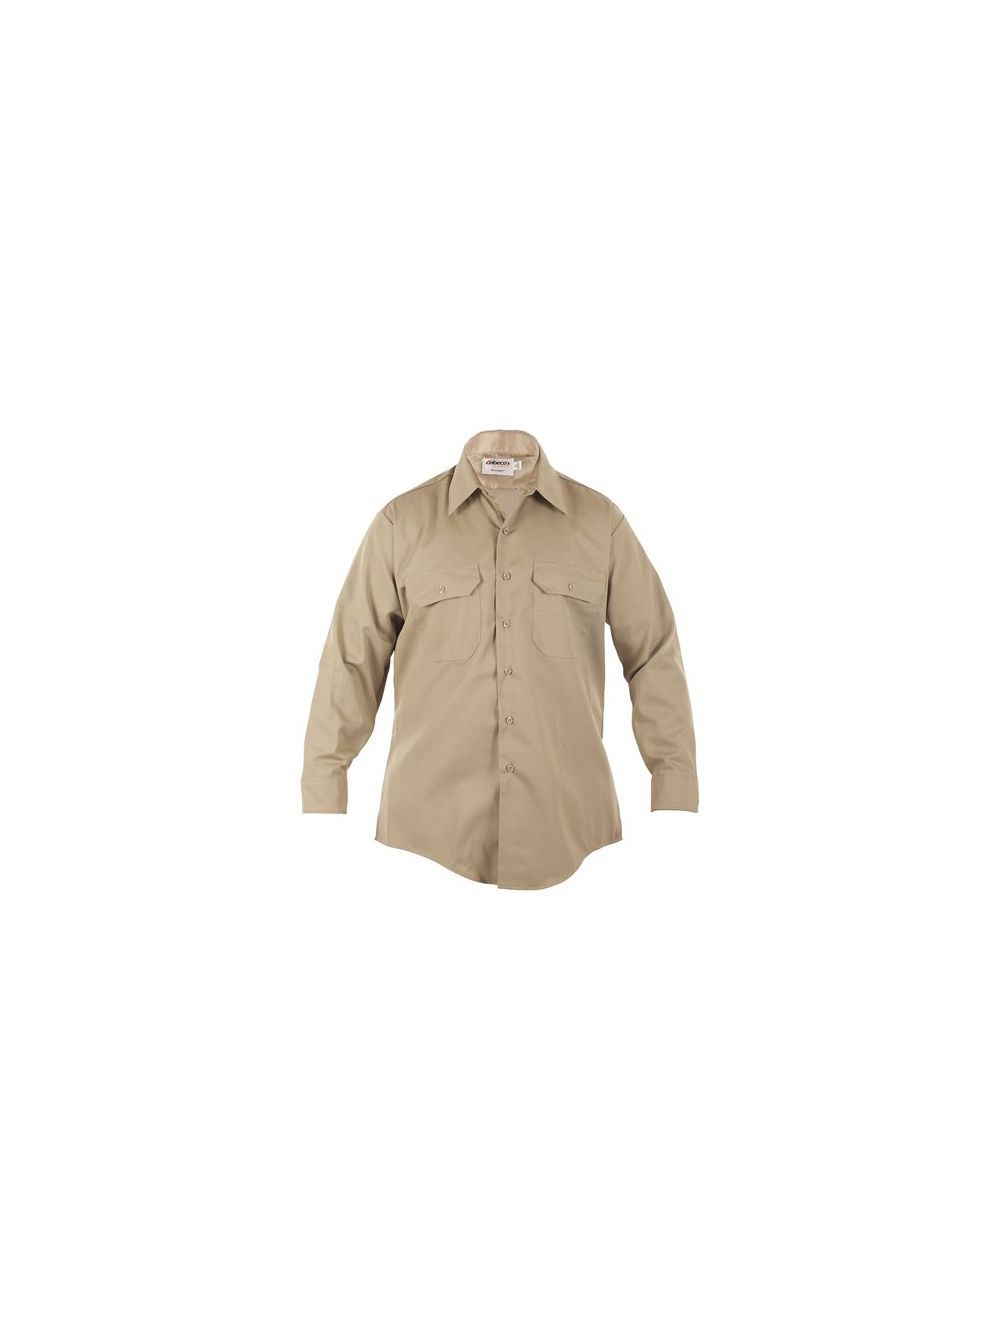 LA County Sheriff 65/35 Poly/Cotton Twill LS Shirt